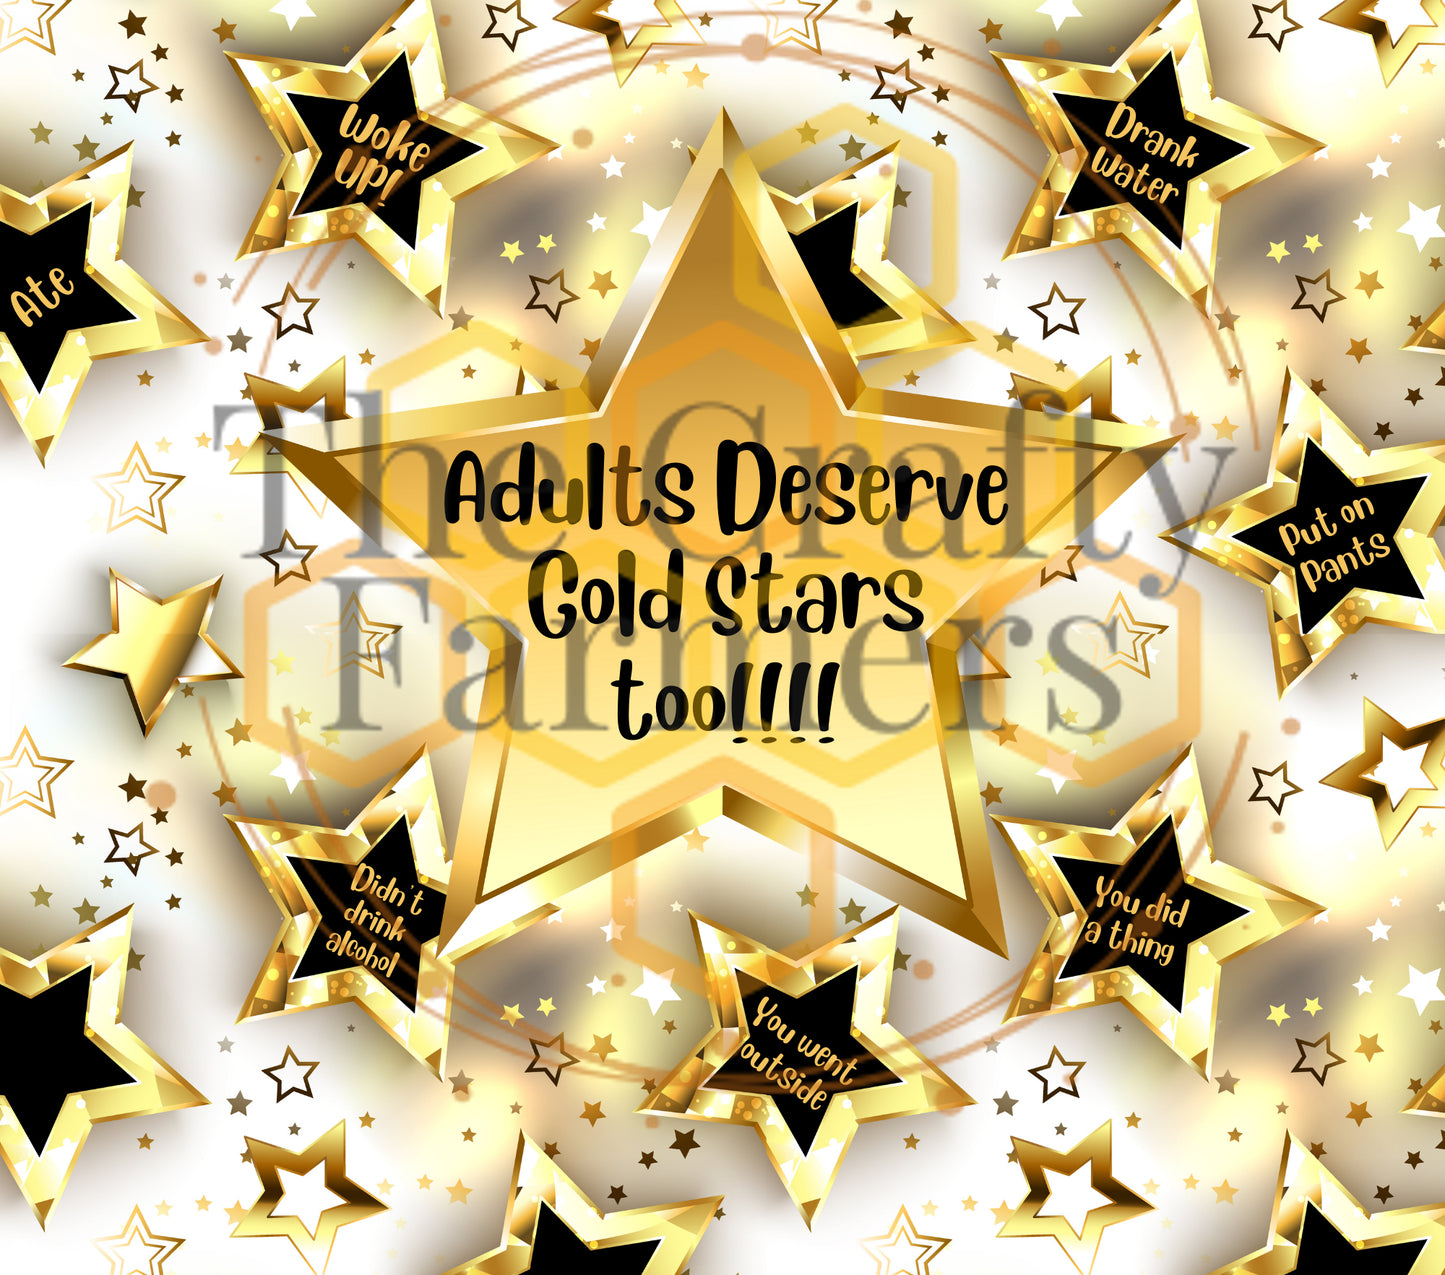 Adults Deserve Gold Stars too!!!!